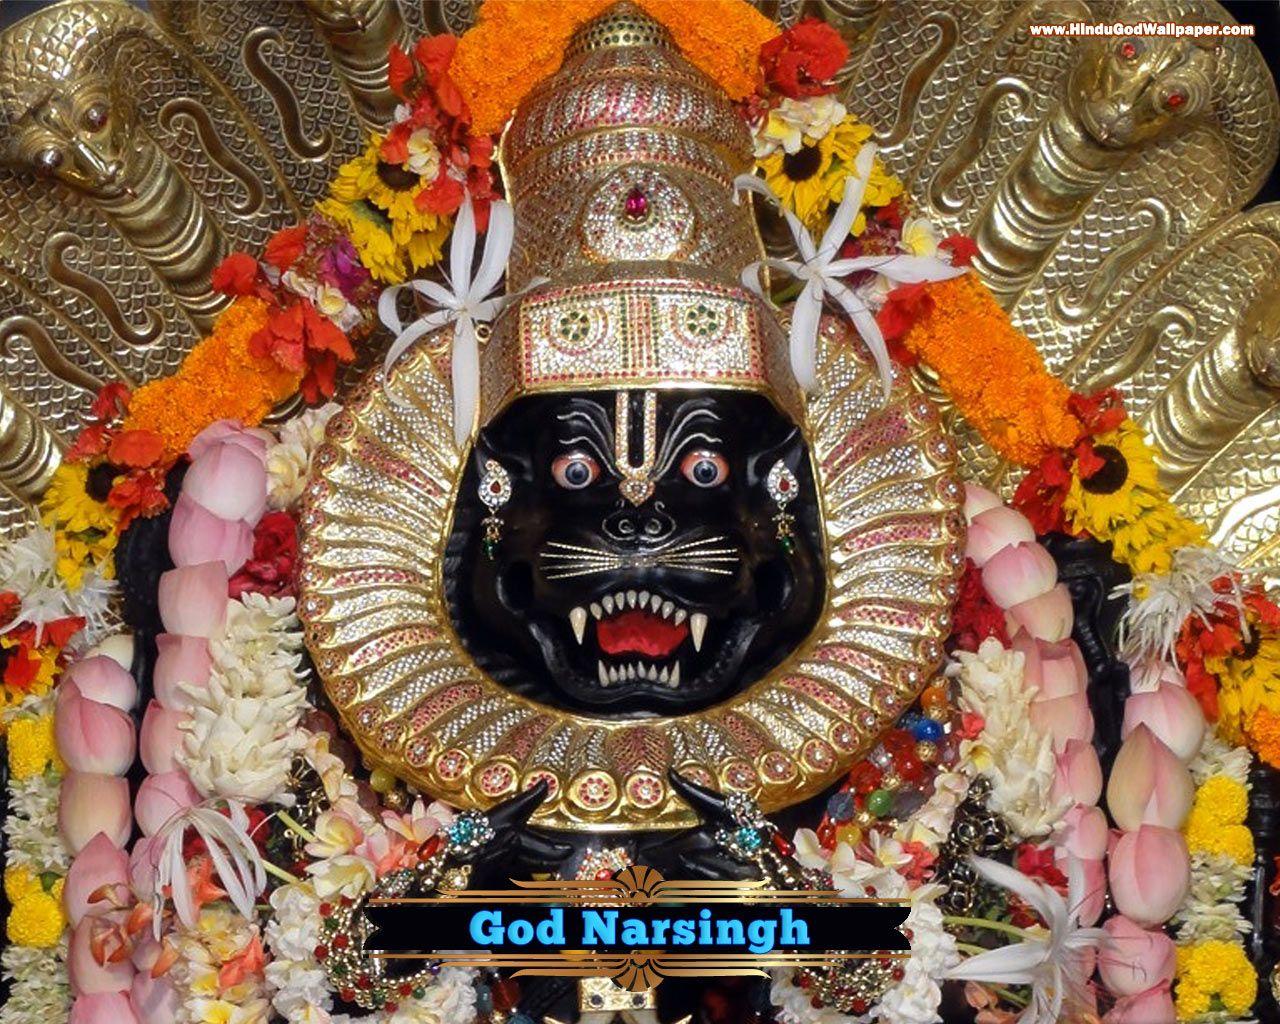 Narsingh Bhagwan Wallpaper Free Download. GOD AND GODDESS